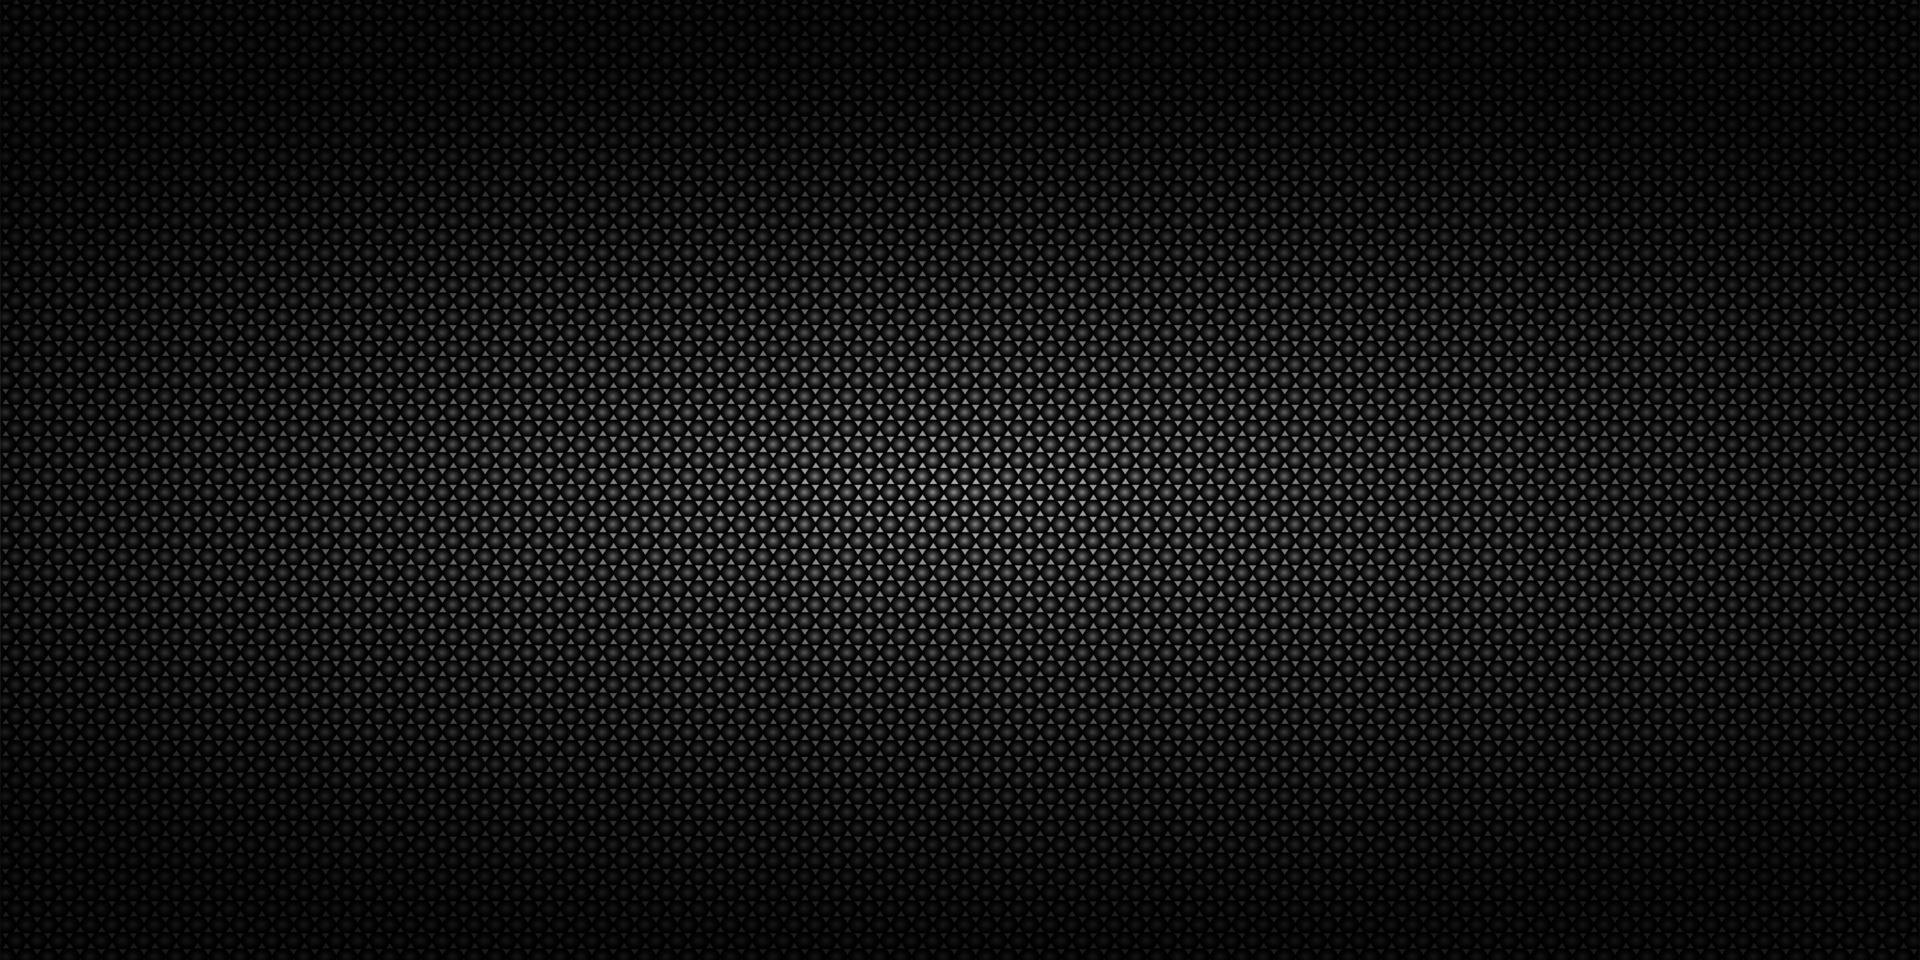 Round dot pattern on black background vector